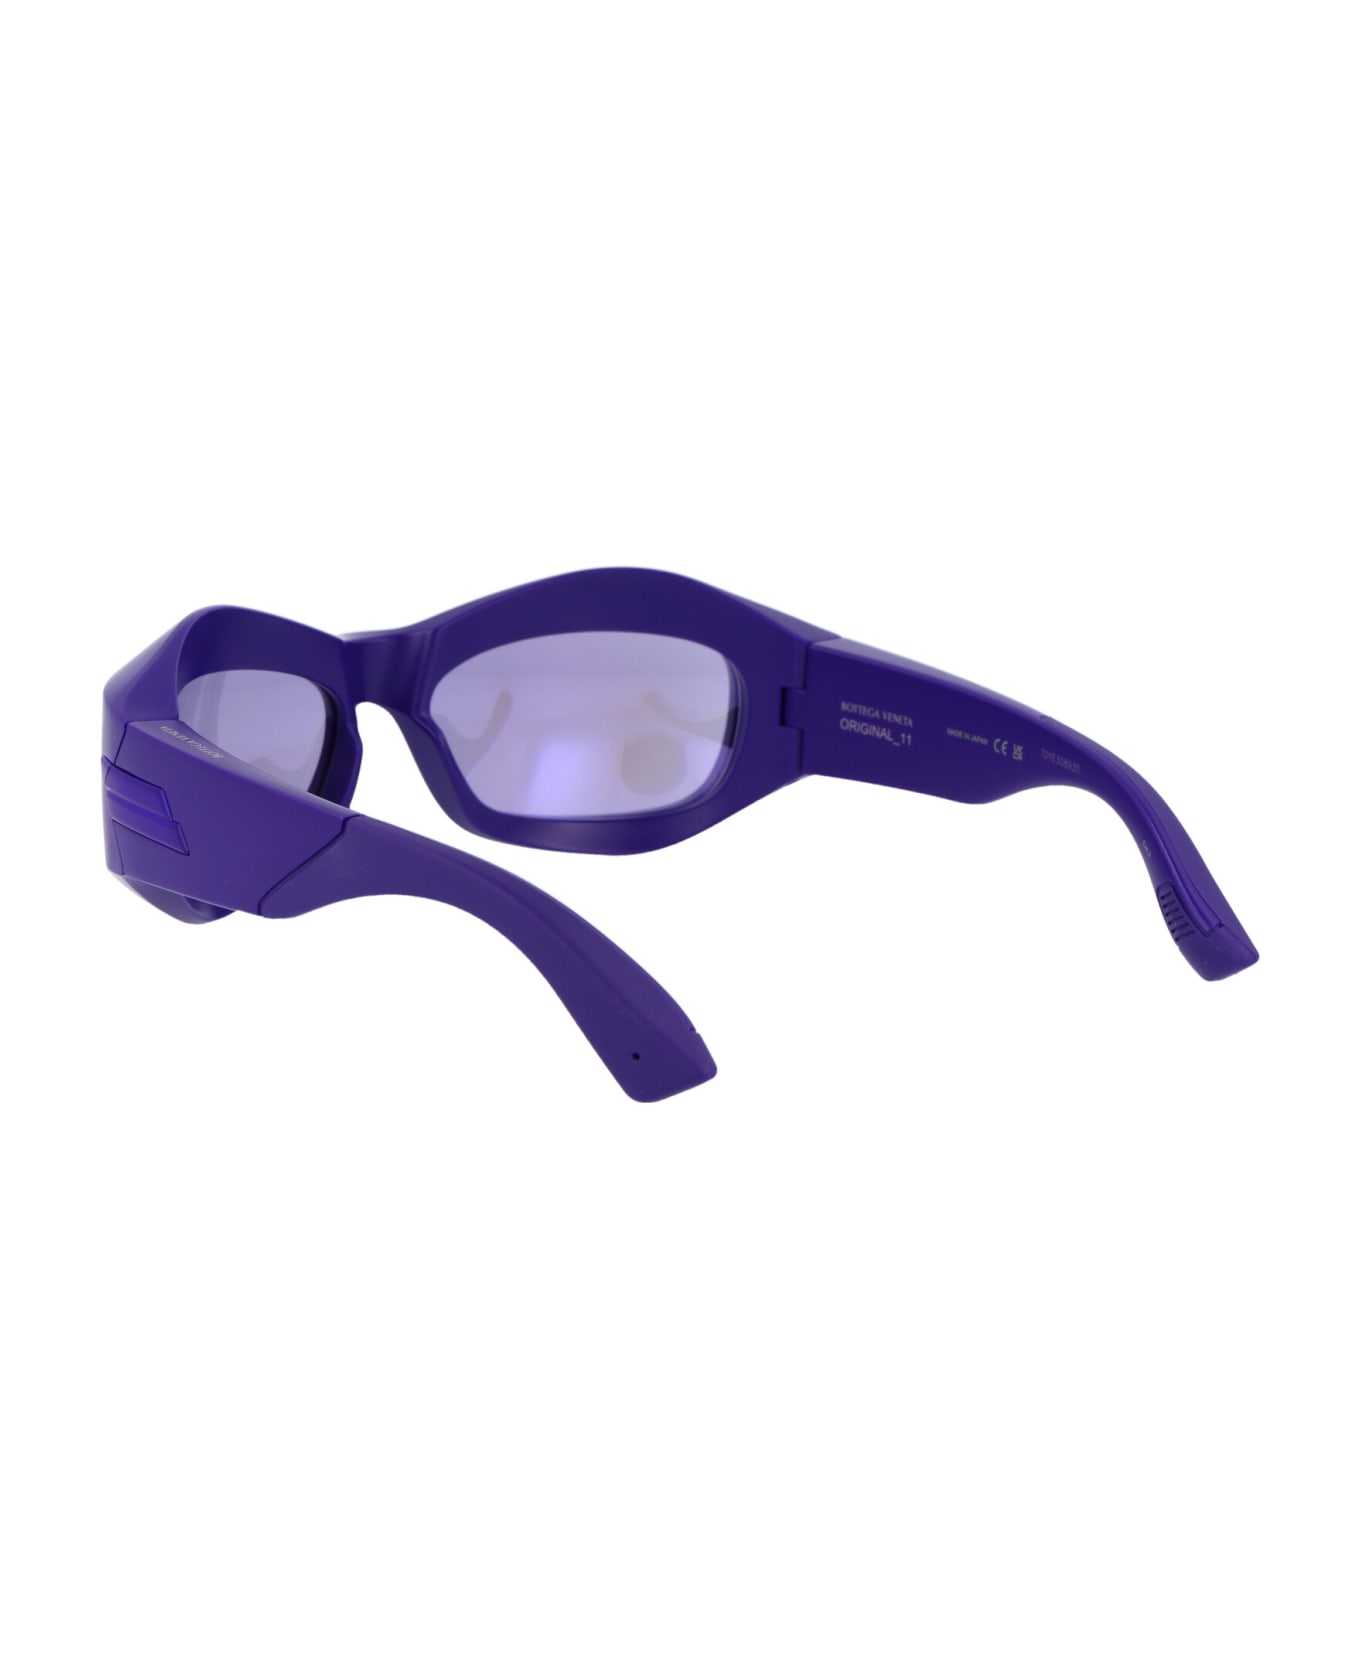 Bottega Veneta Eyewear Bv1086s Sunglasses - 008 VIOLET VIOLET VIOLET サングラス